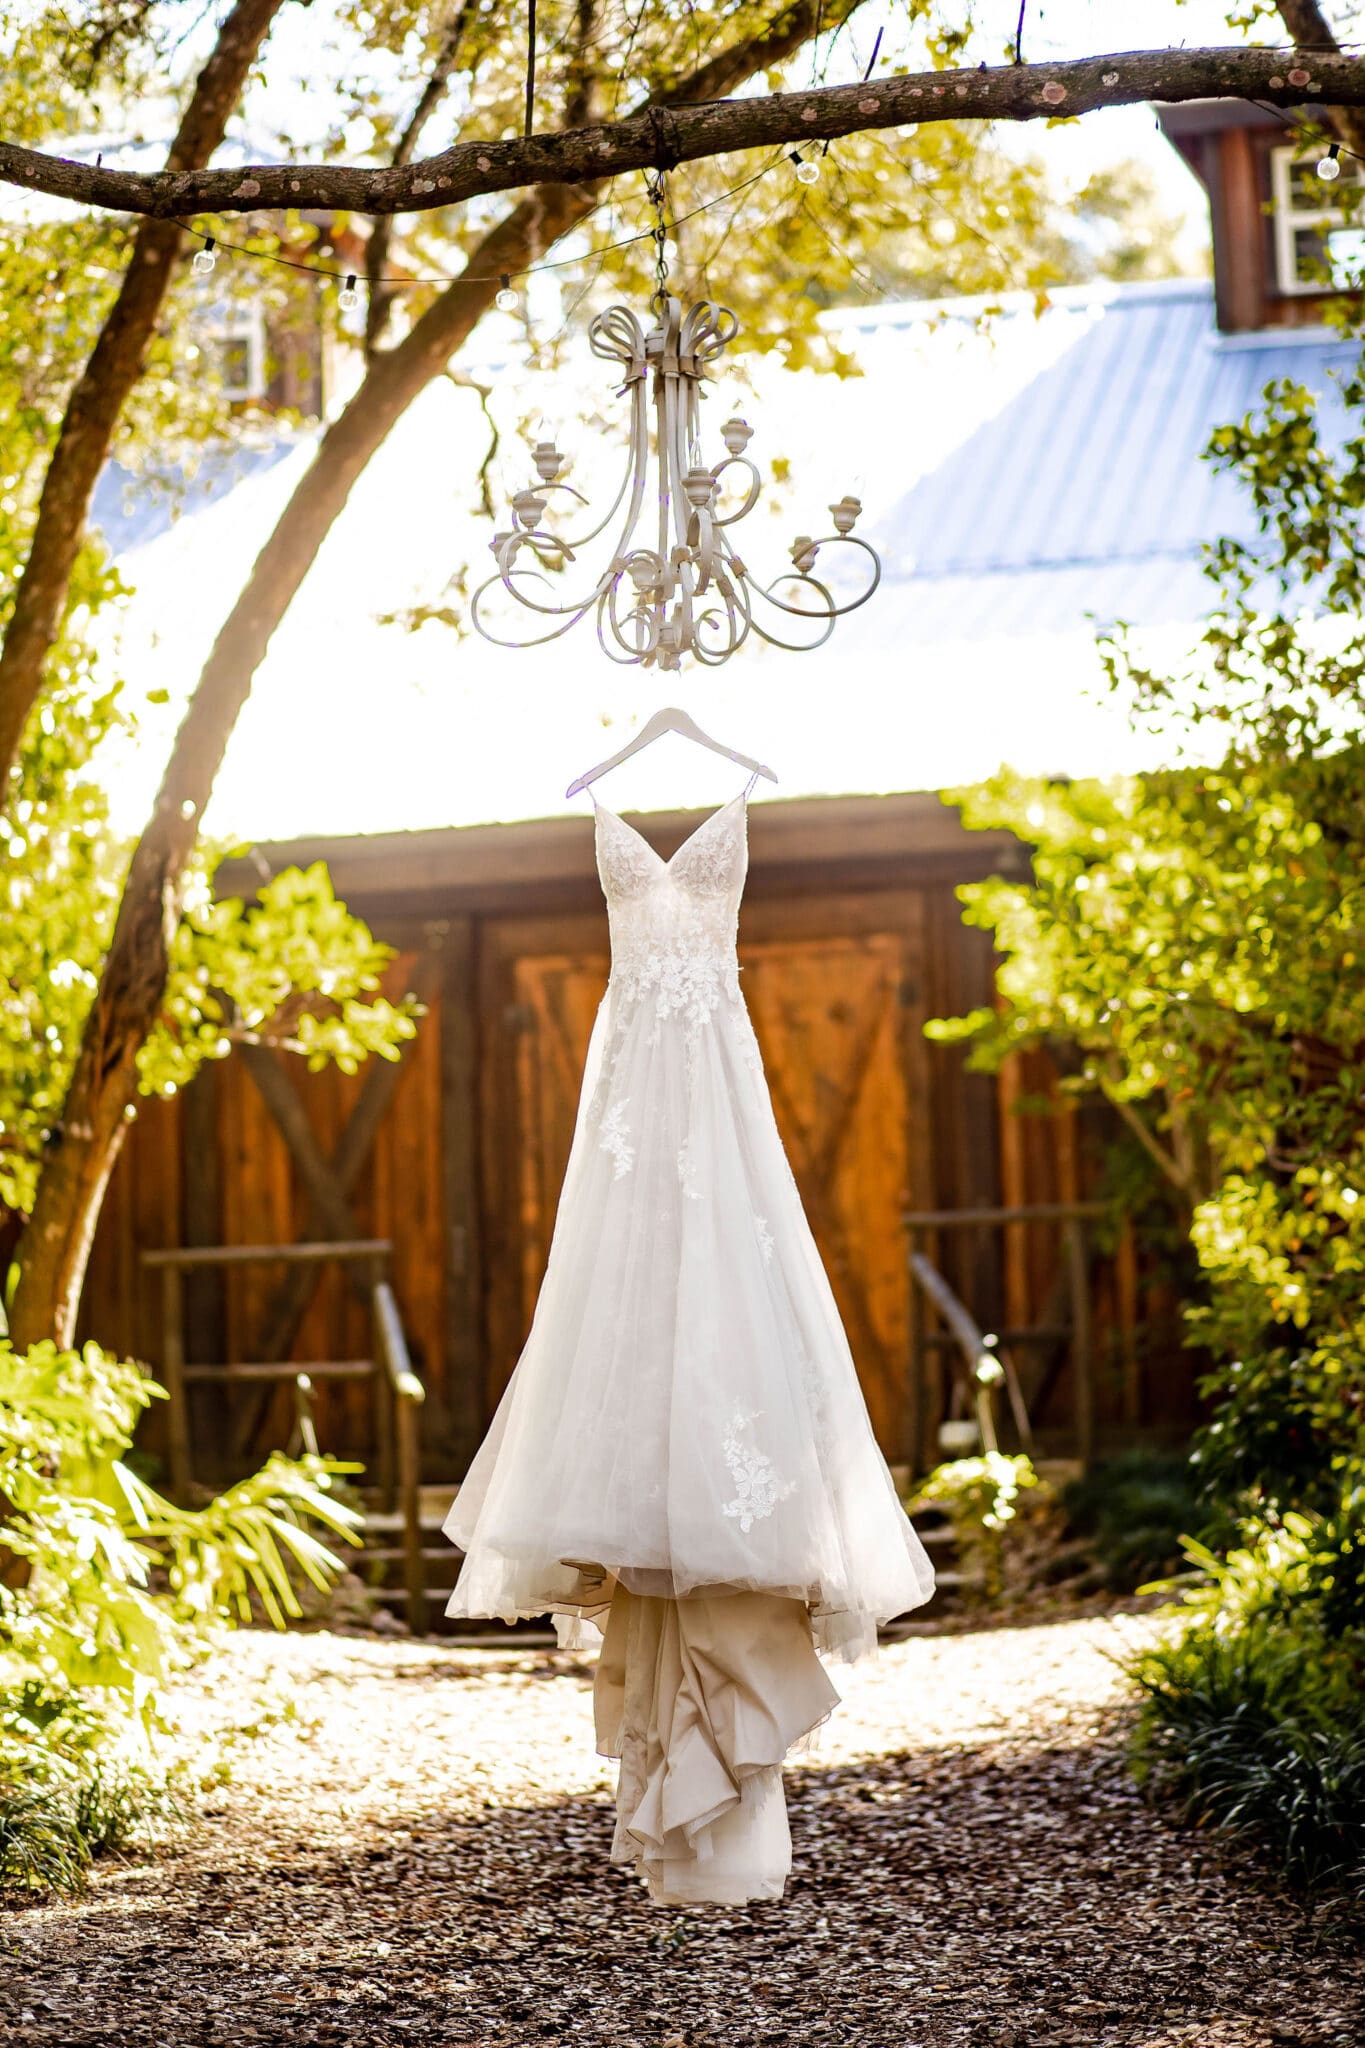 Timeless Ethereal Wedding Inspiration - Styled Shoot 14